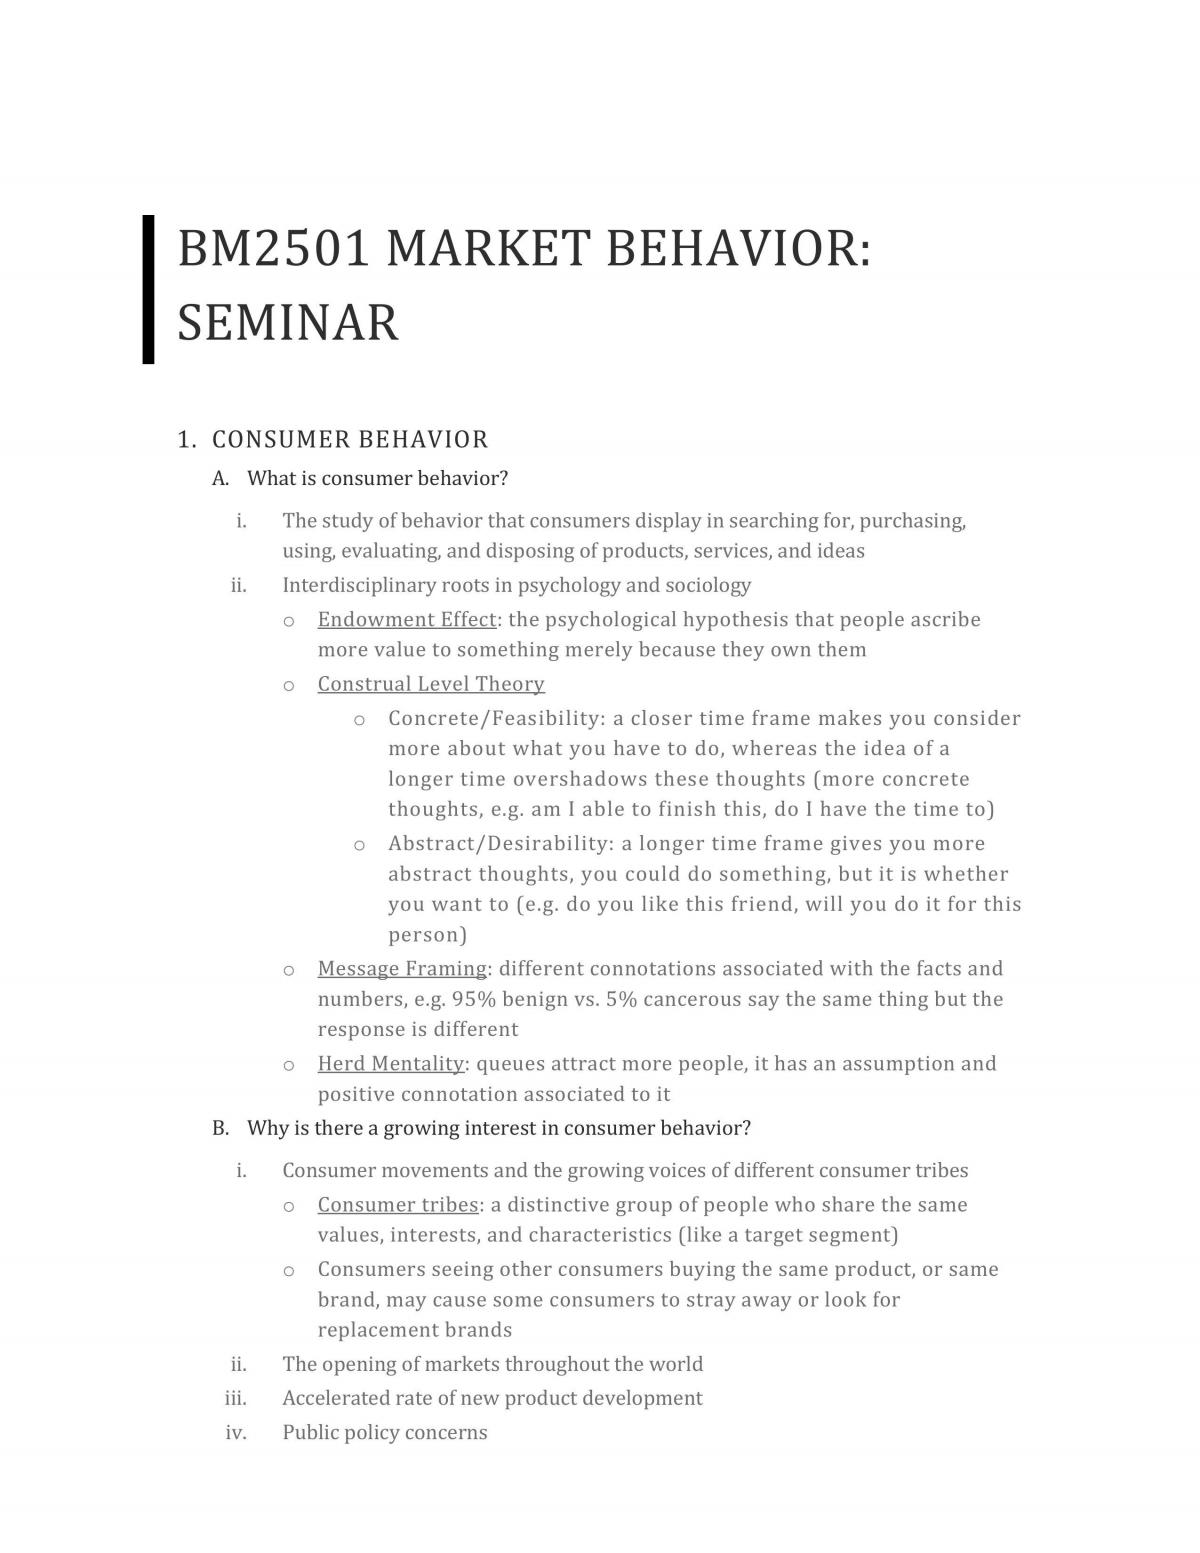 Market Behavior Seminar Bible - Page 1